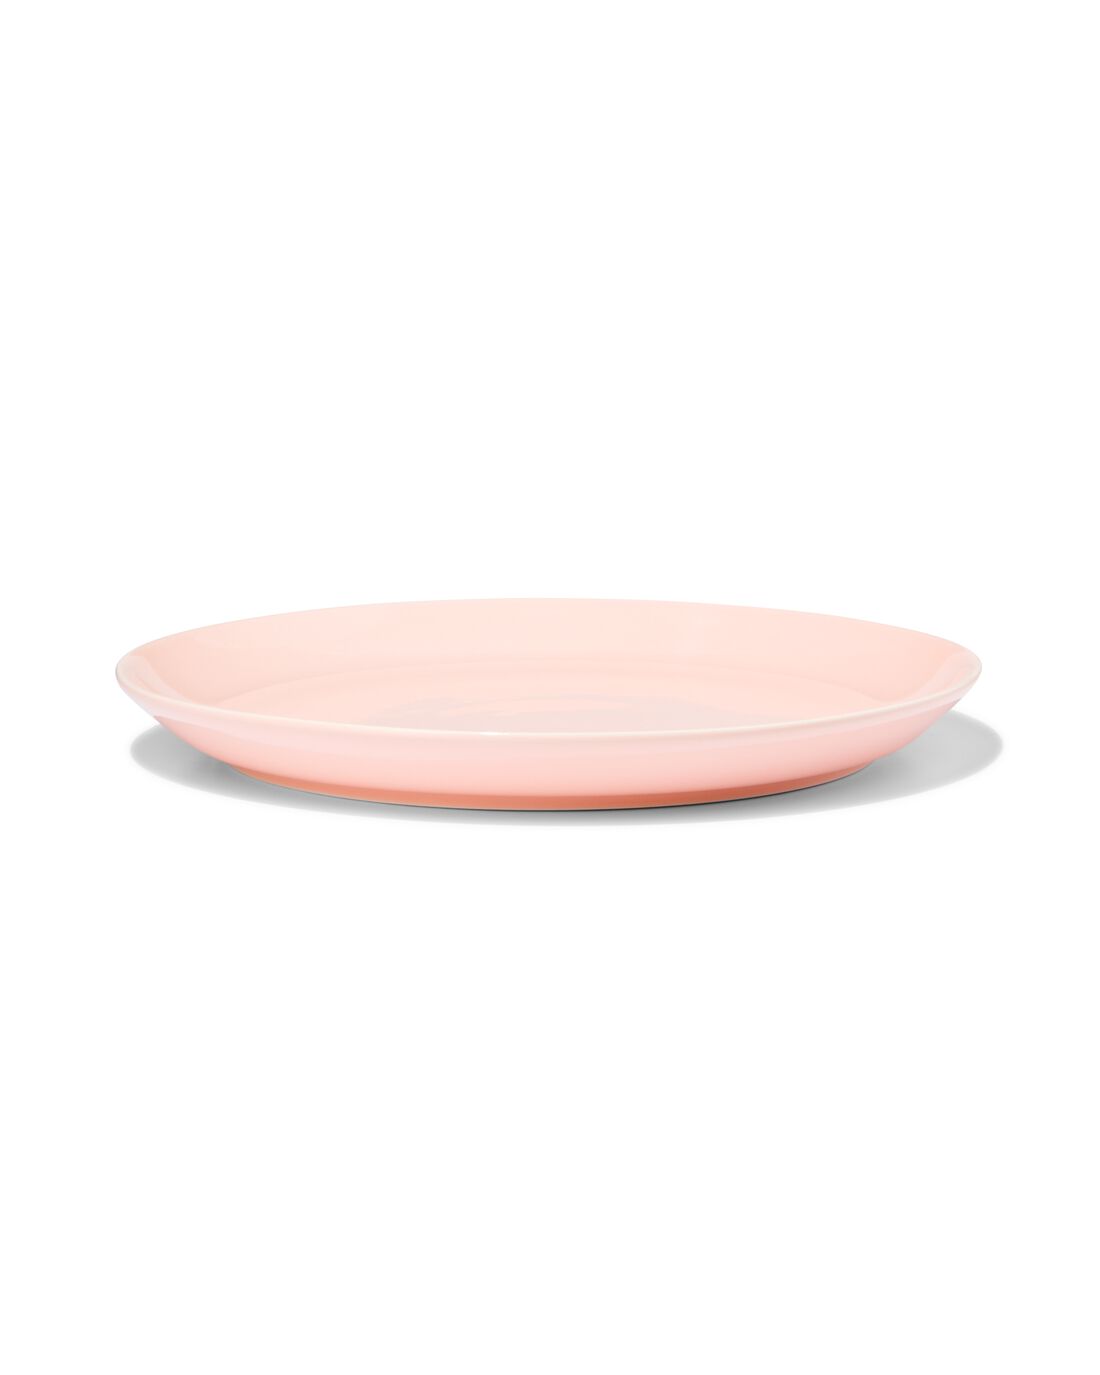 HEMA Ontbijtbord 21cm Tafelgenoten New Bone Roze (roze)